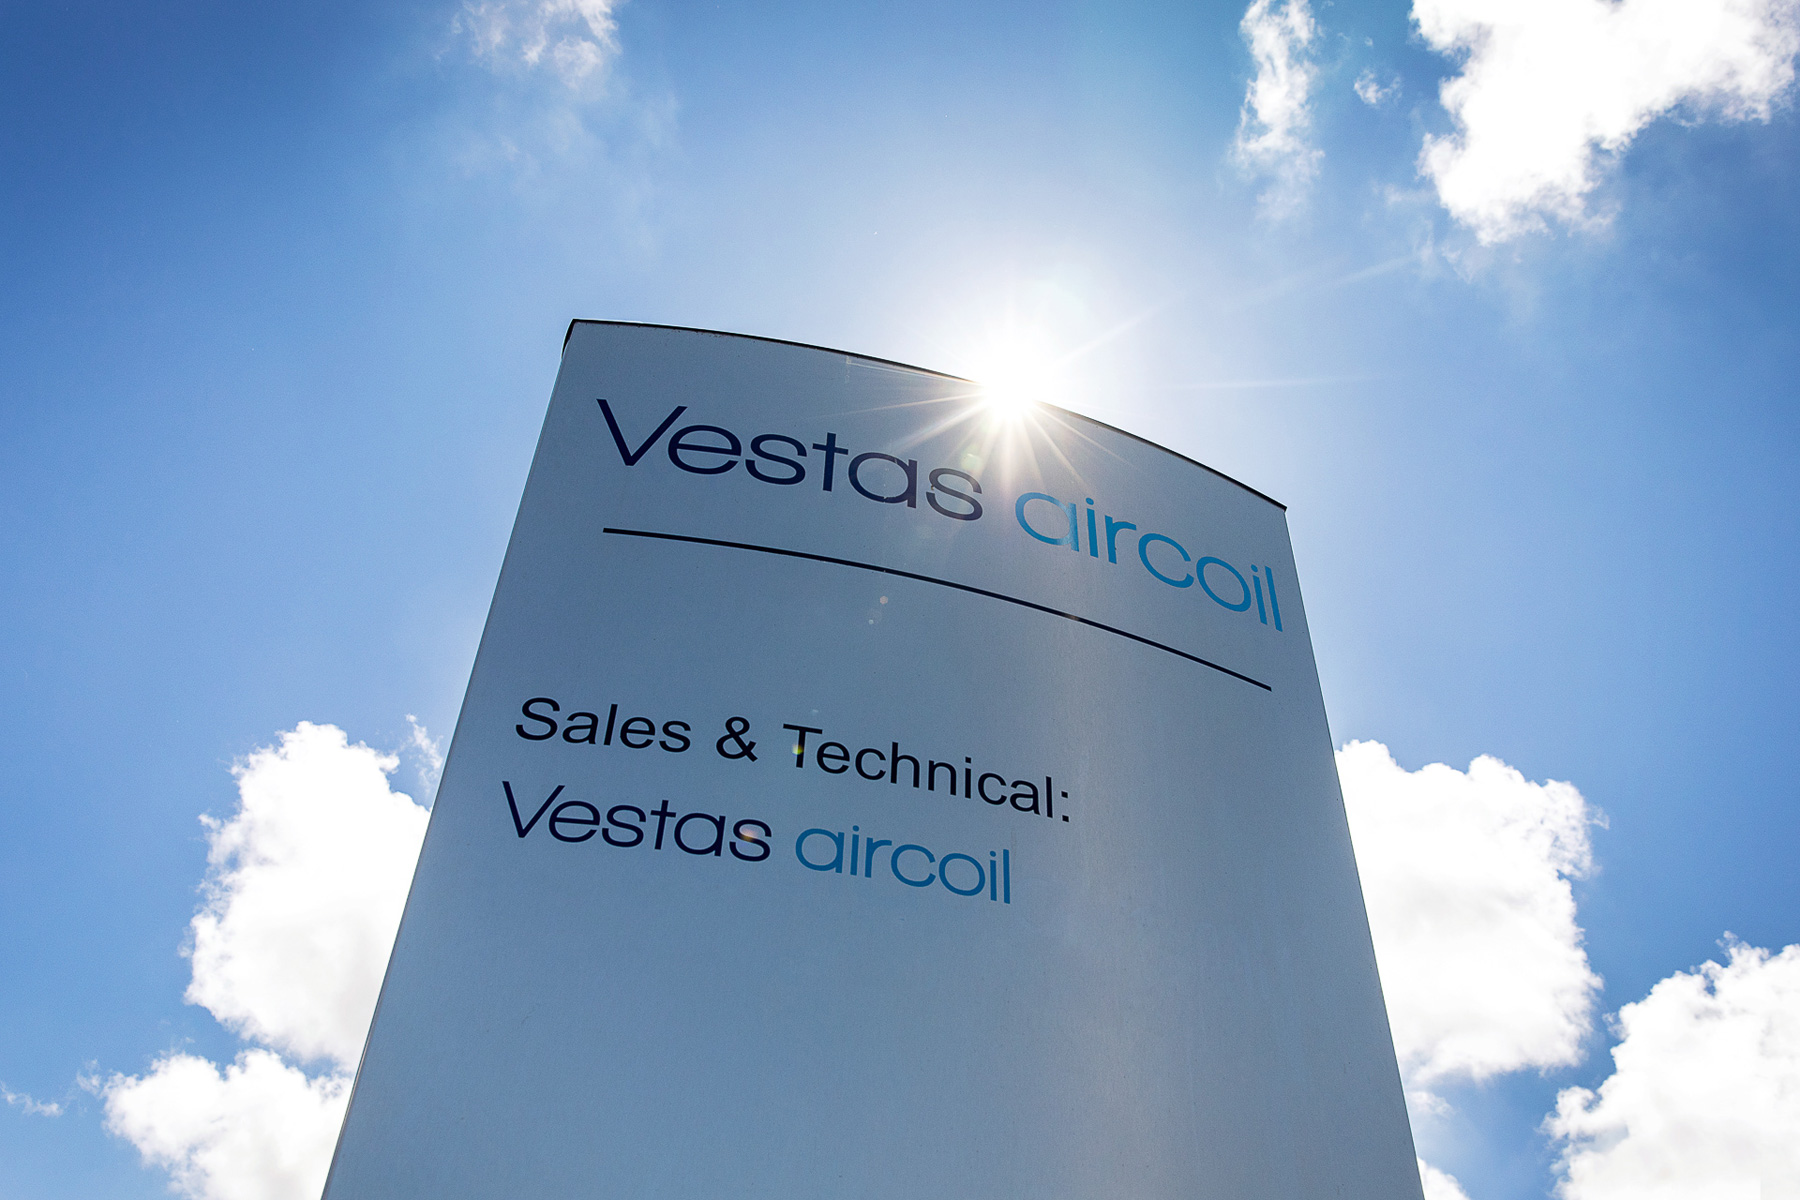 Welcome to Vestas aircoil